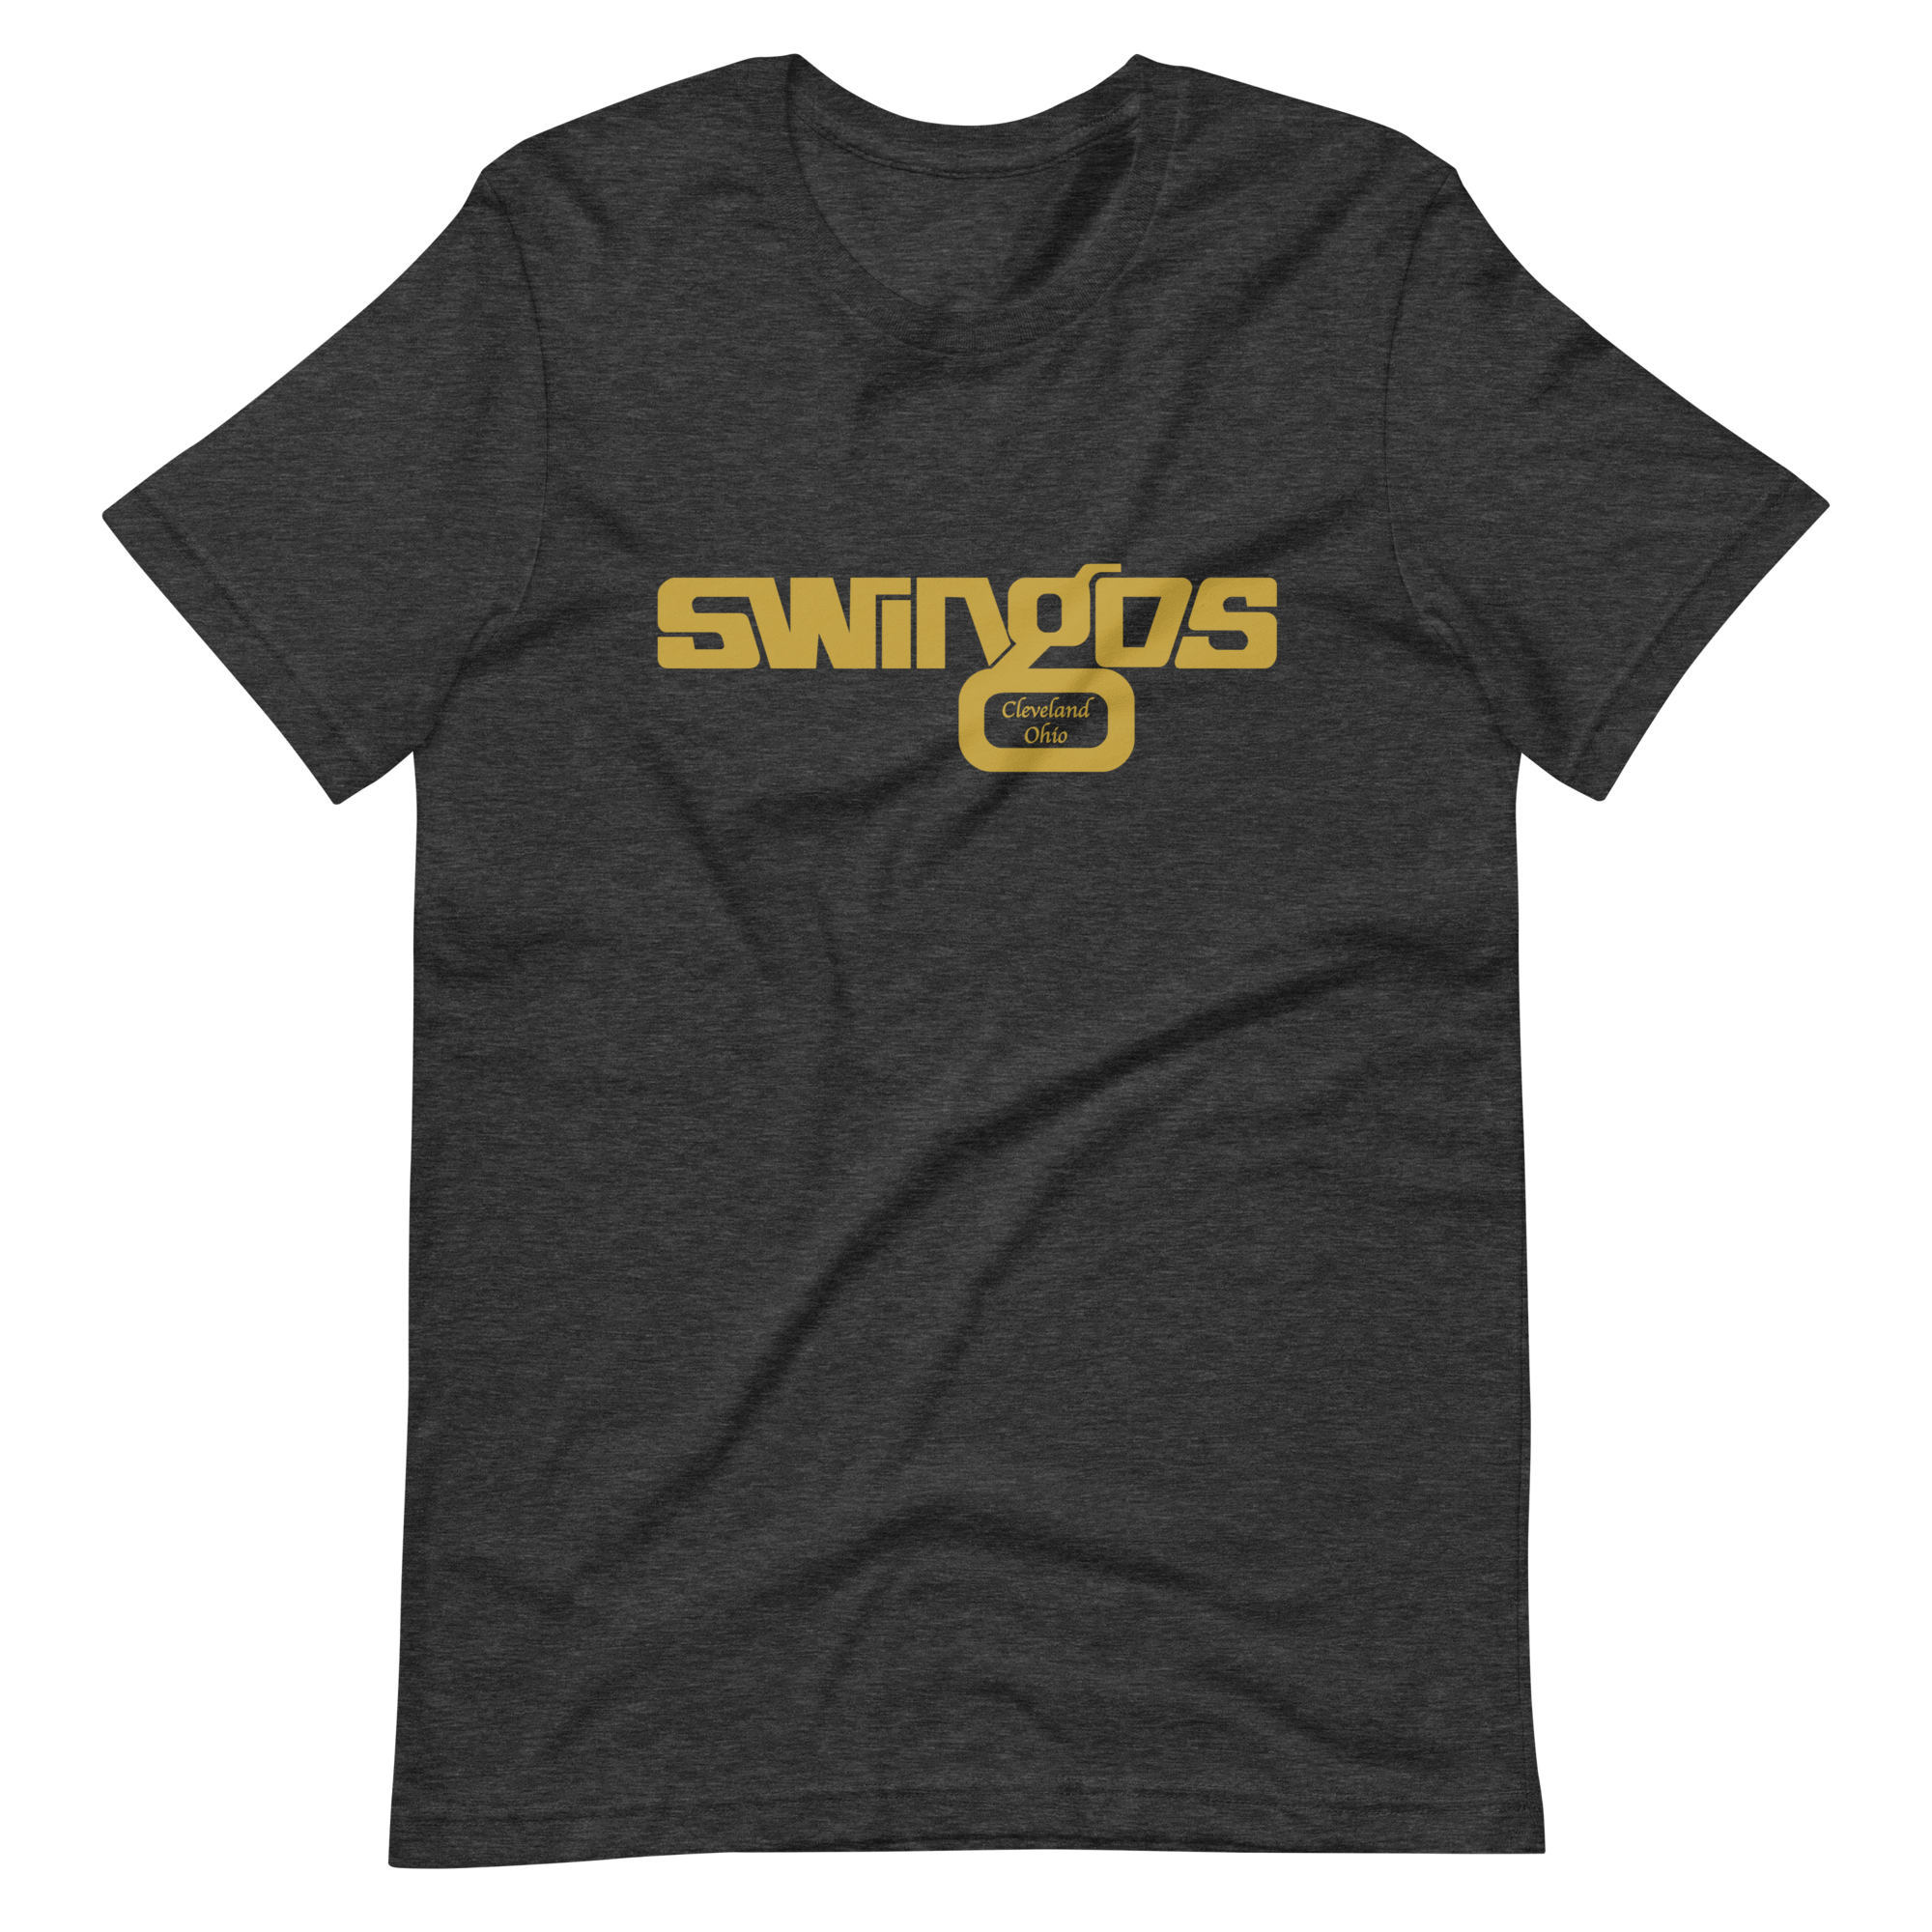 Swingos T-Shirt